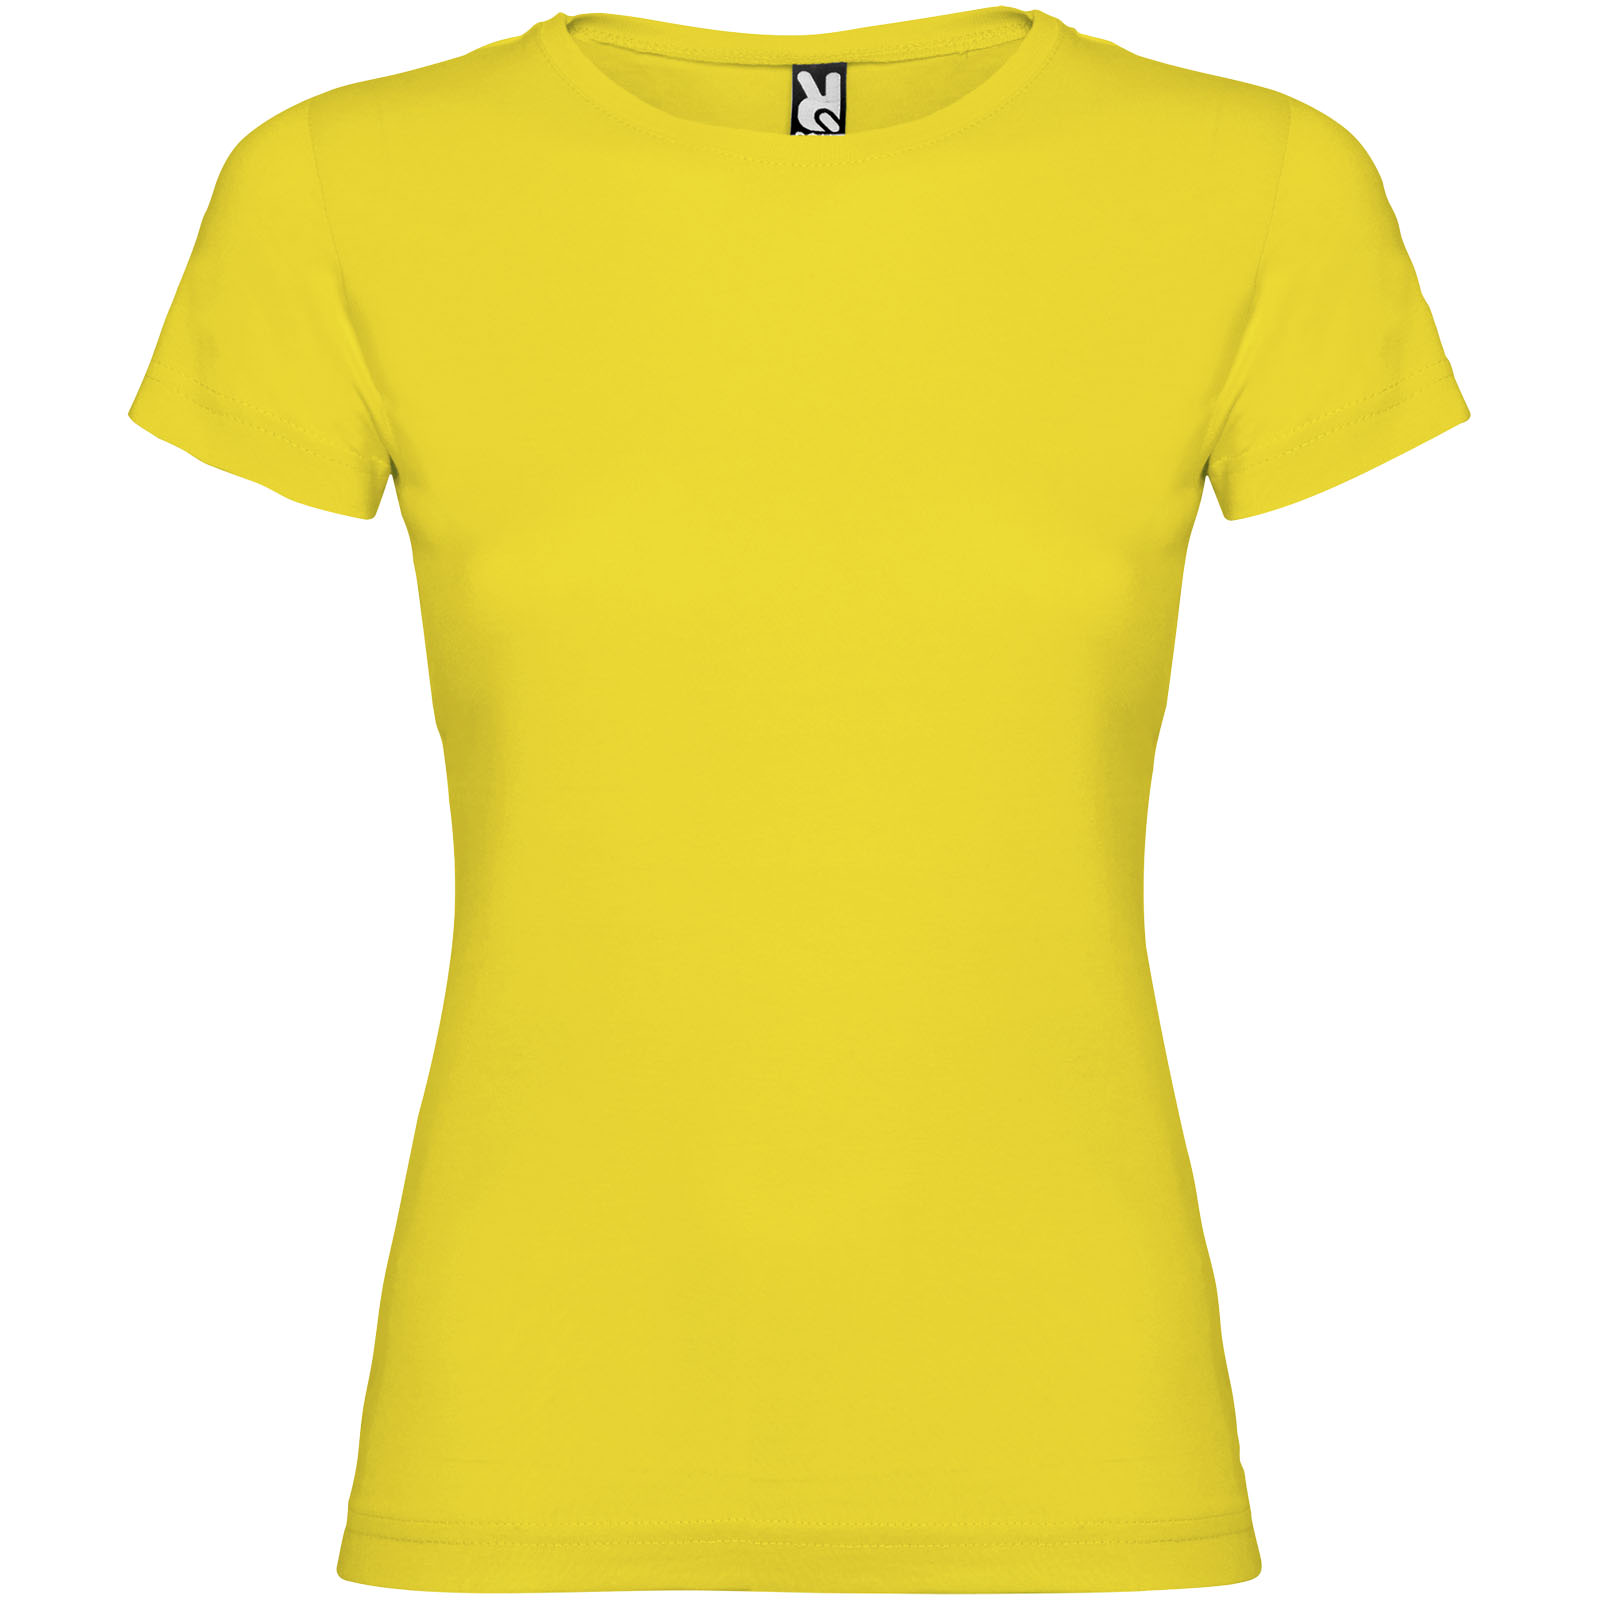 Advertising T-shirts - Jamaica short sleeve women's t-shirt